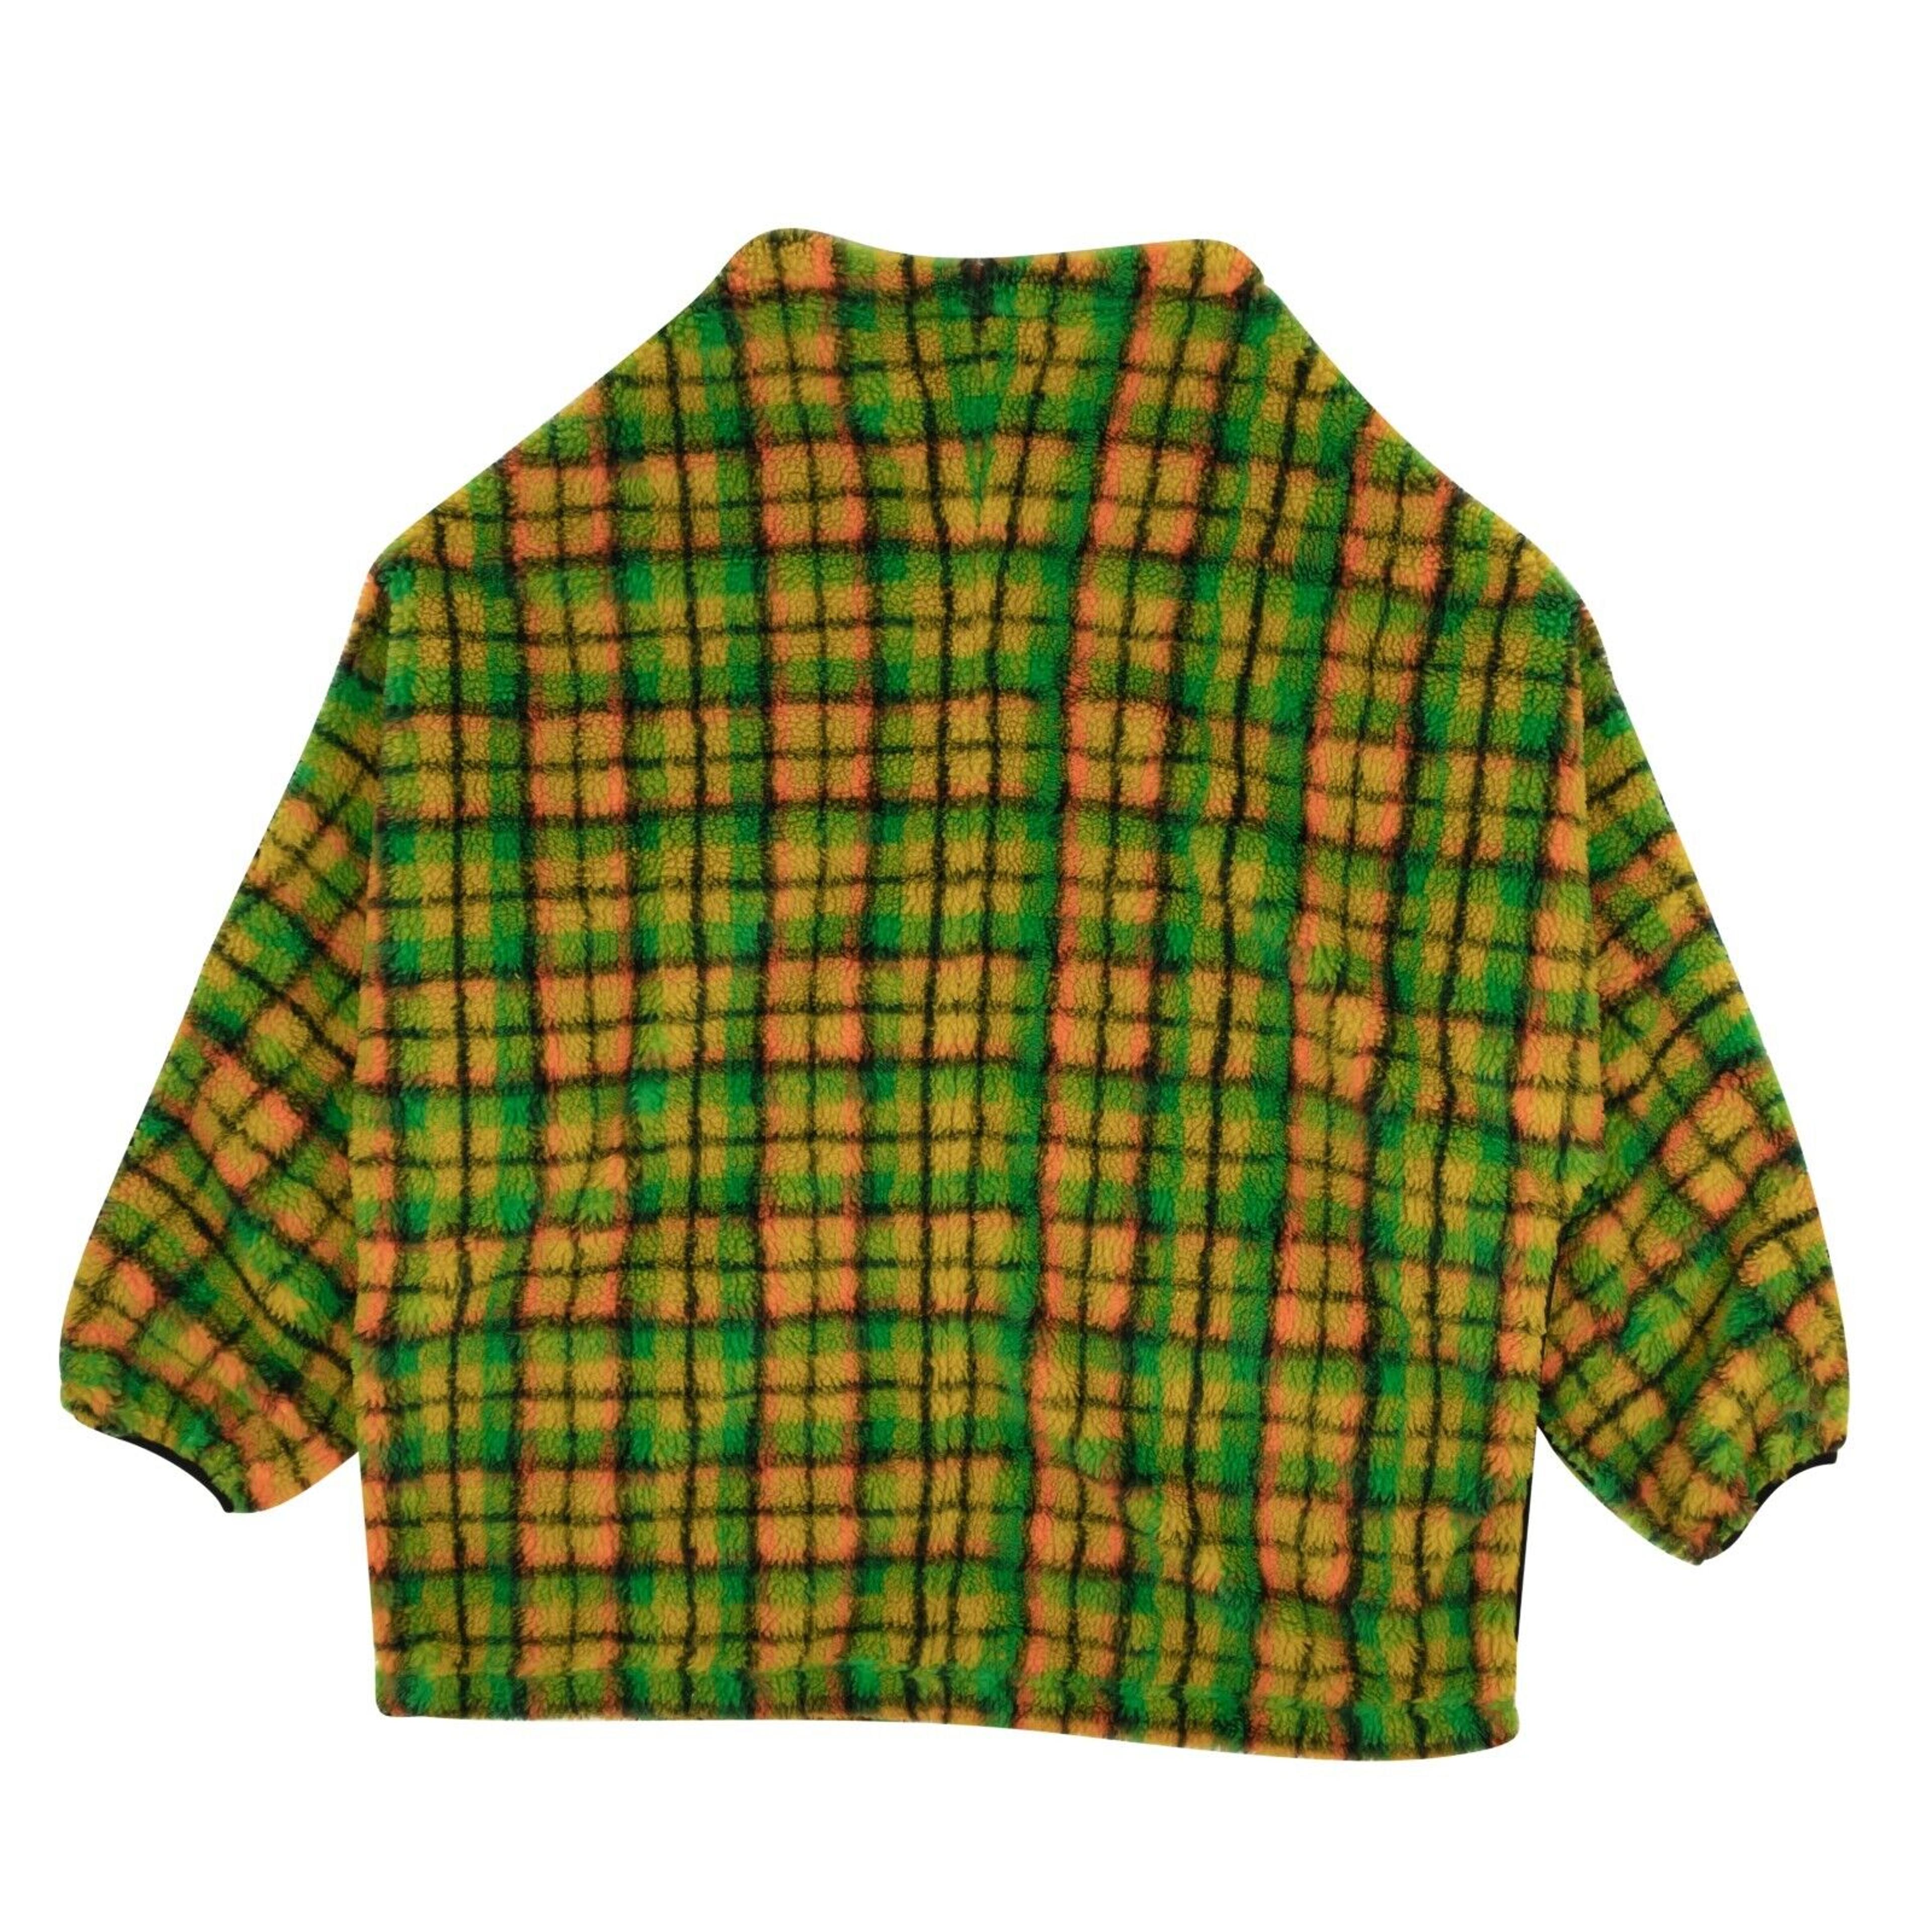 Alternate View 2 of Green Check Multi Fleece Anorak Jacket